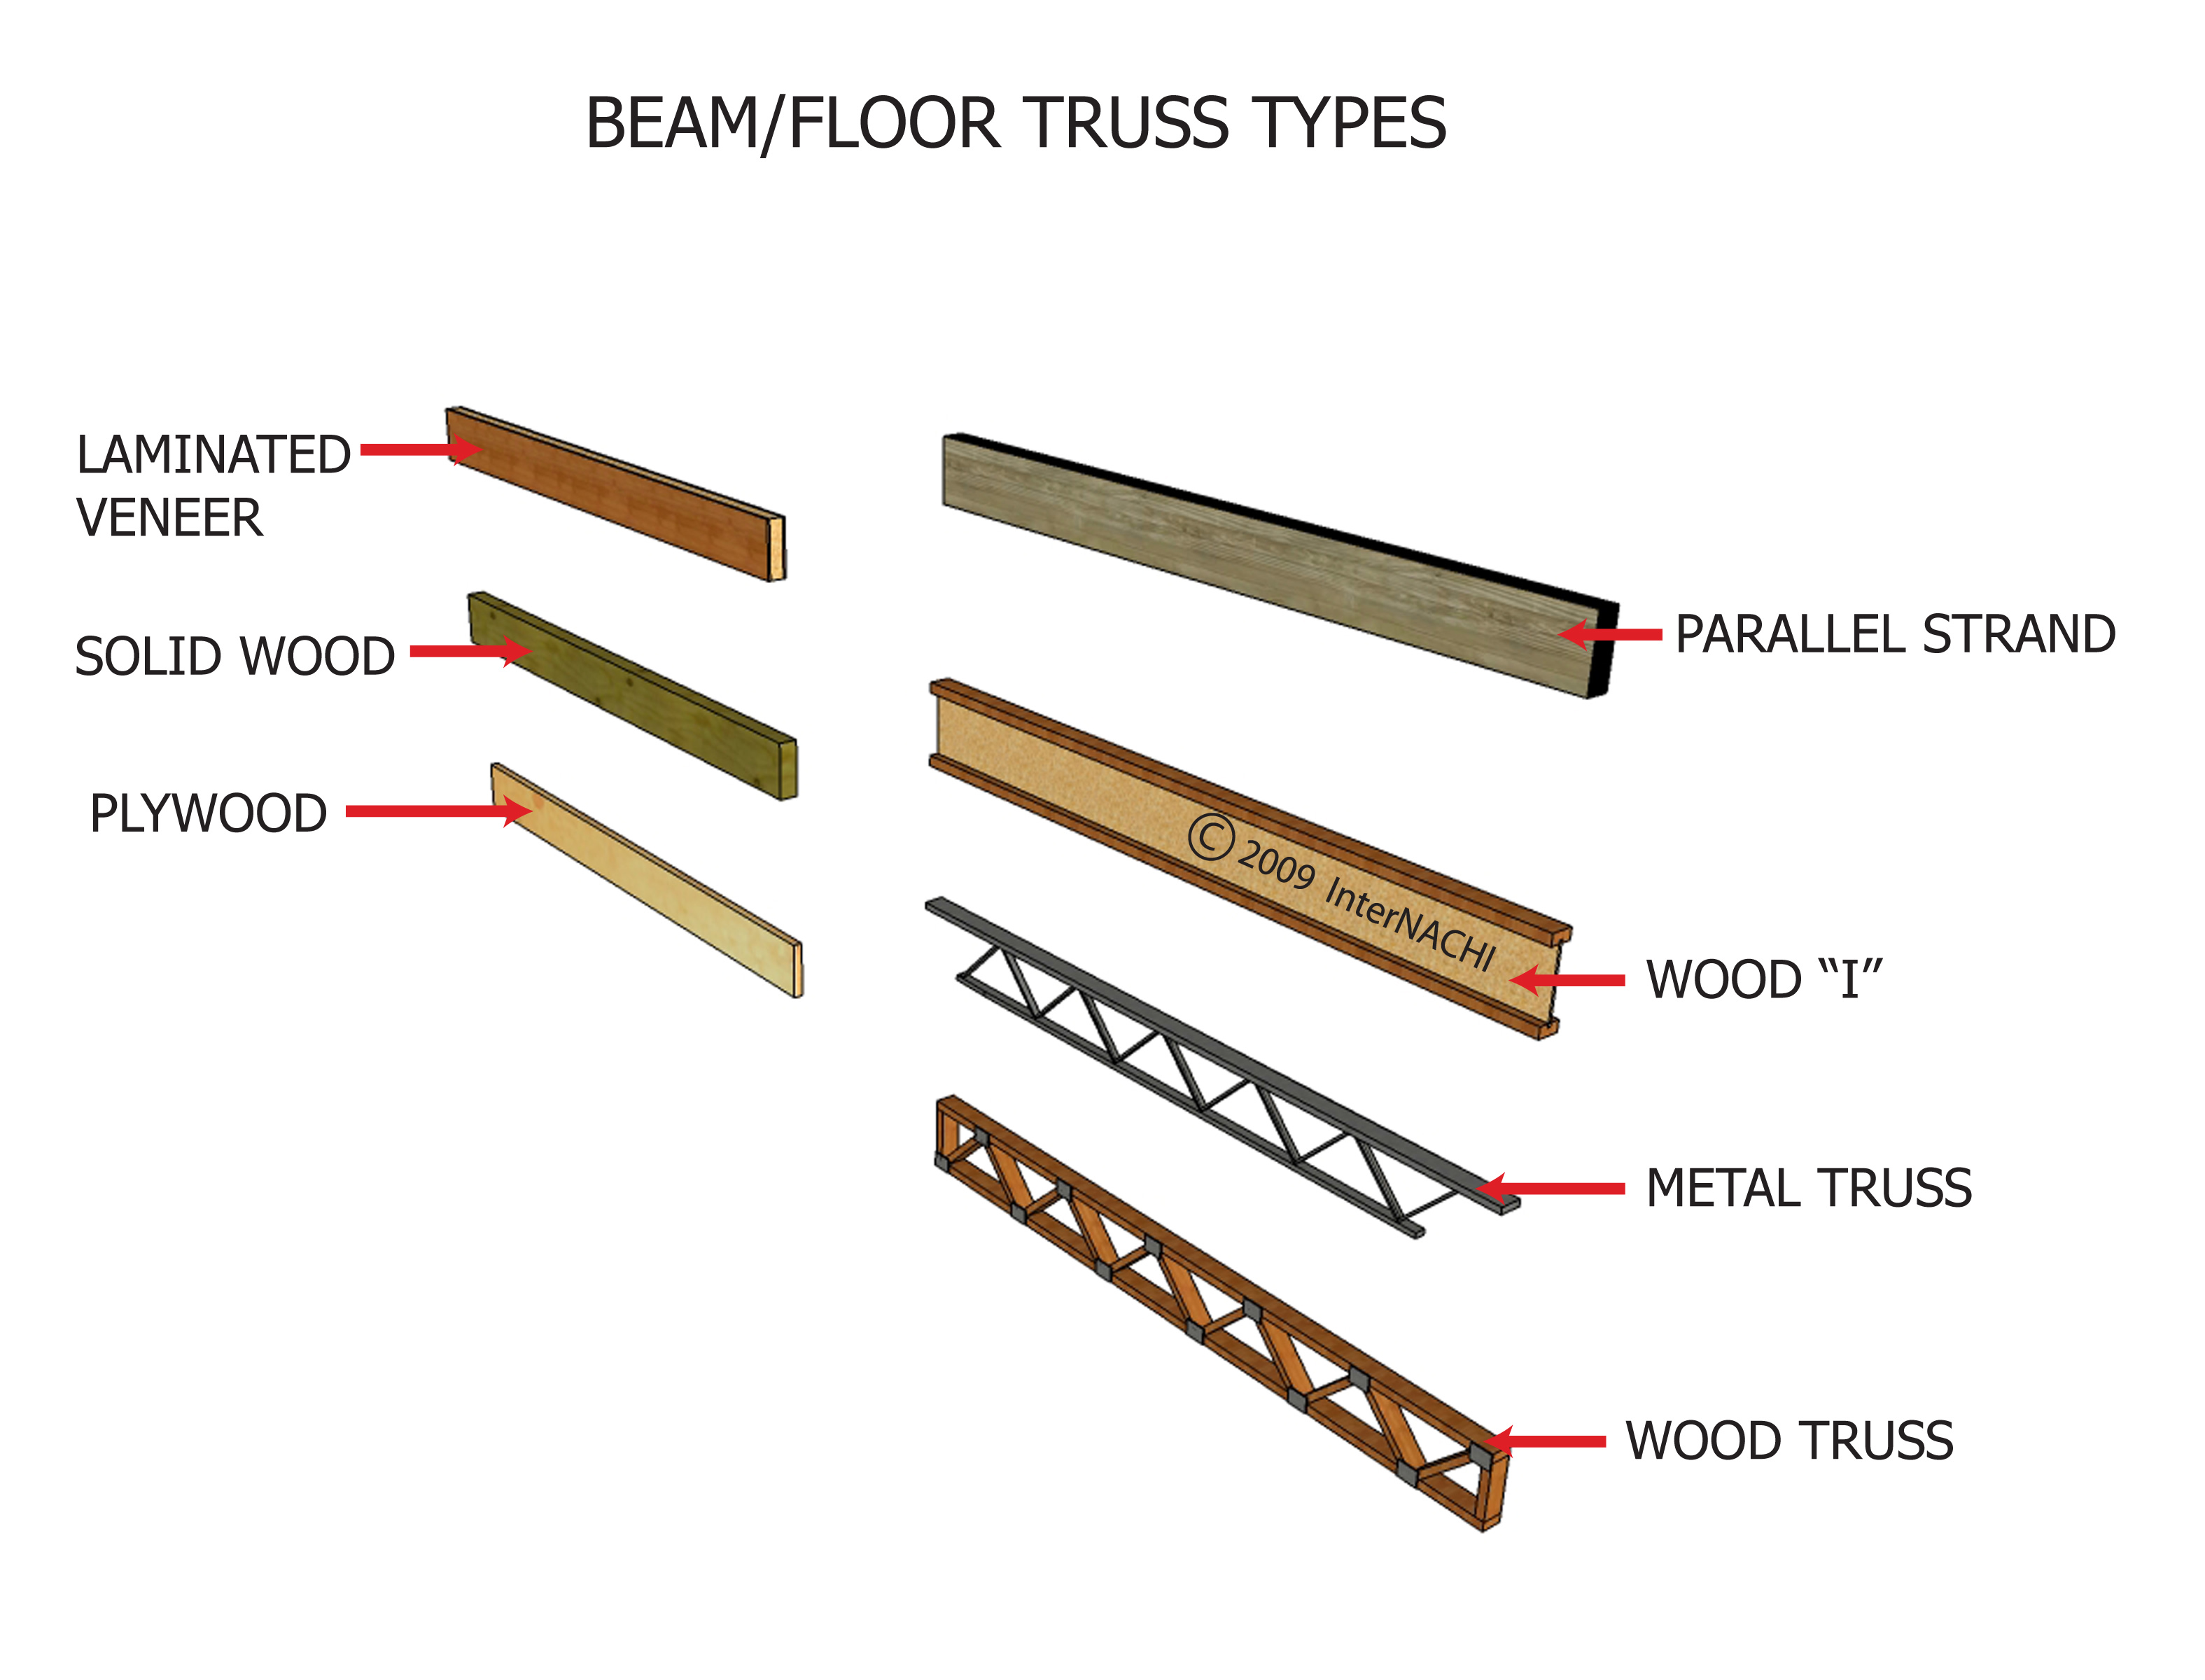 Beam/floor truss types.